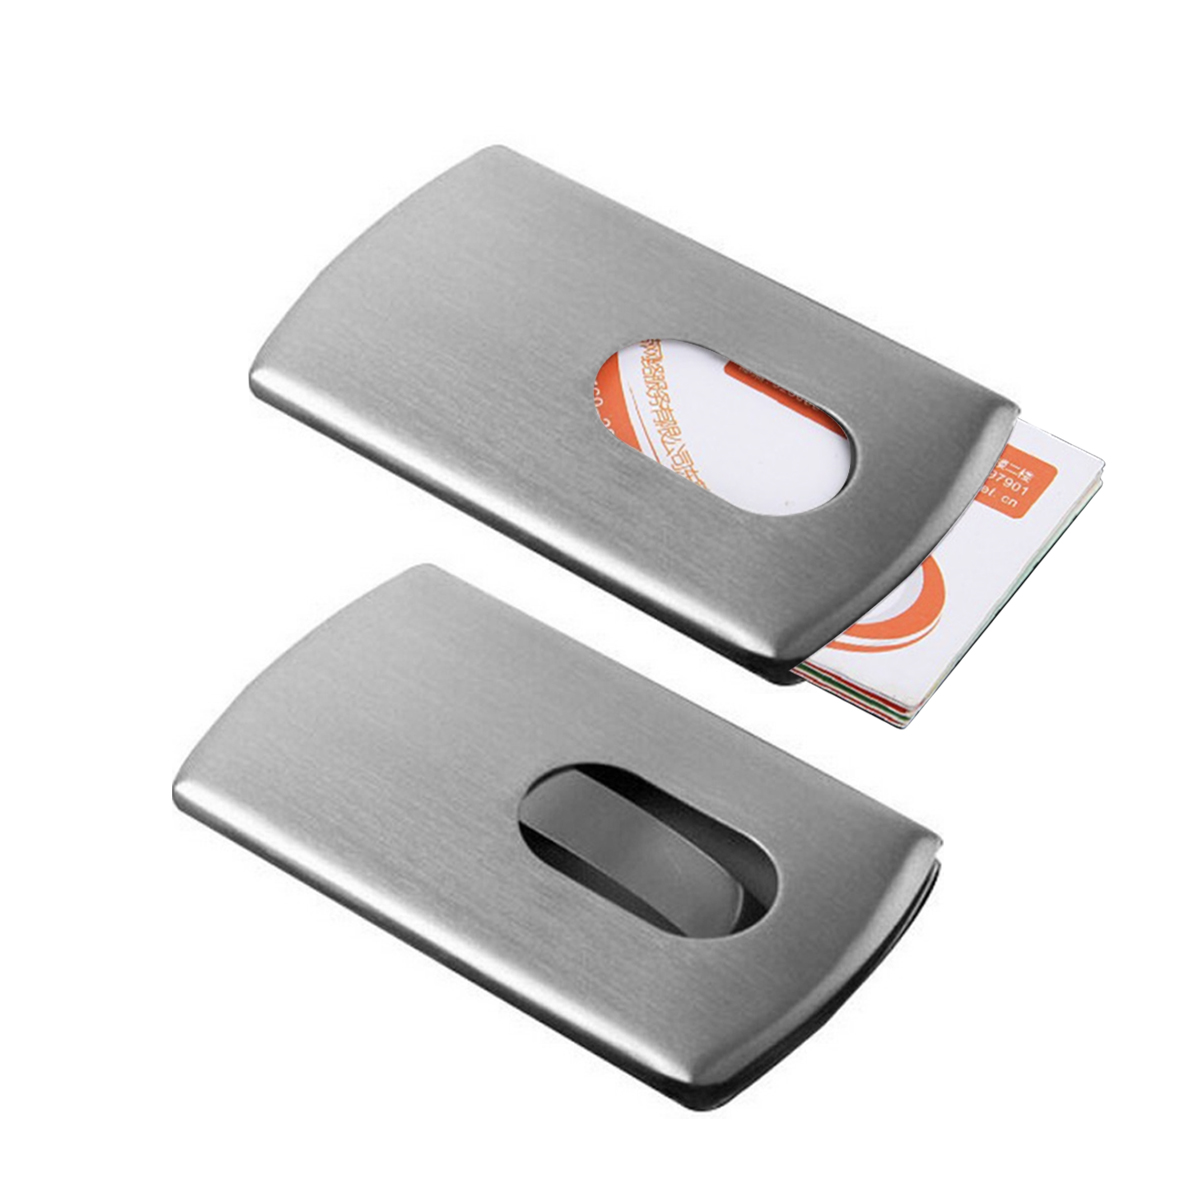 Stainless Steel Card Holder